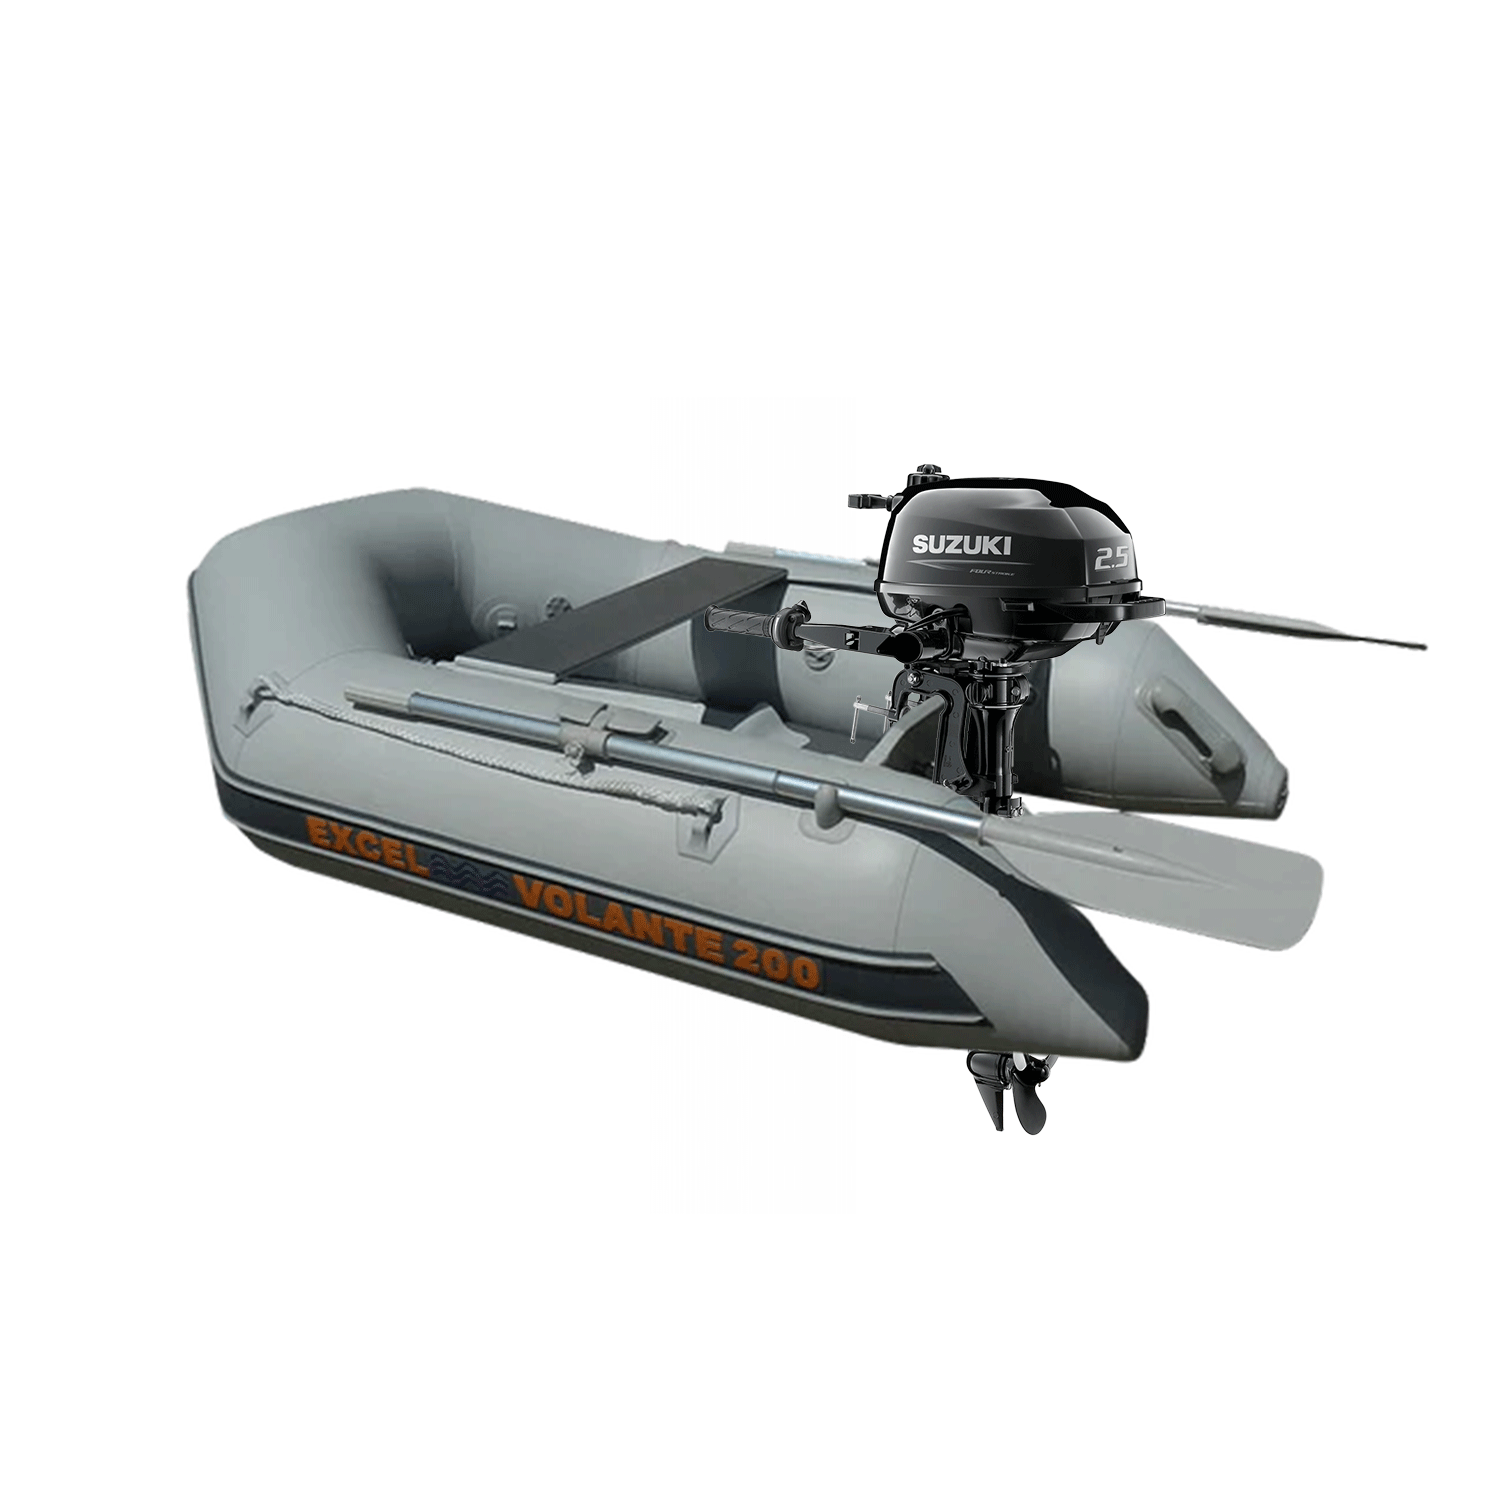 EXCEL Volante 200 Inflatable Boat & Suzuki 2.5 HP Outboard Engine Bundle